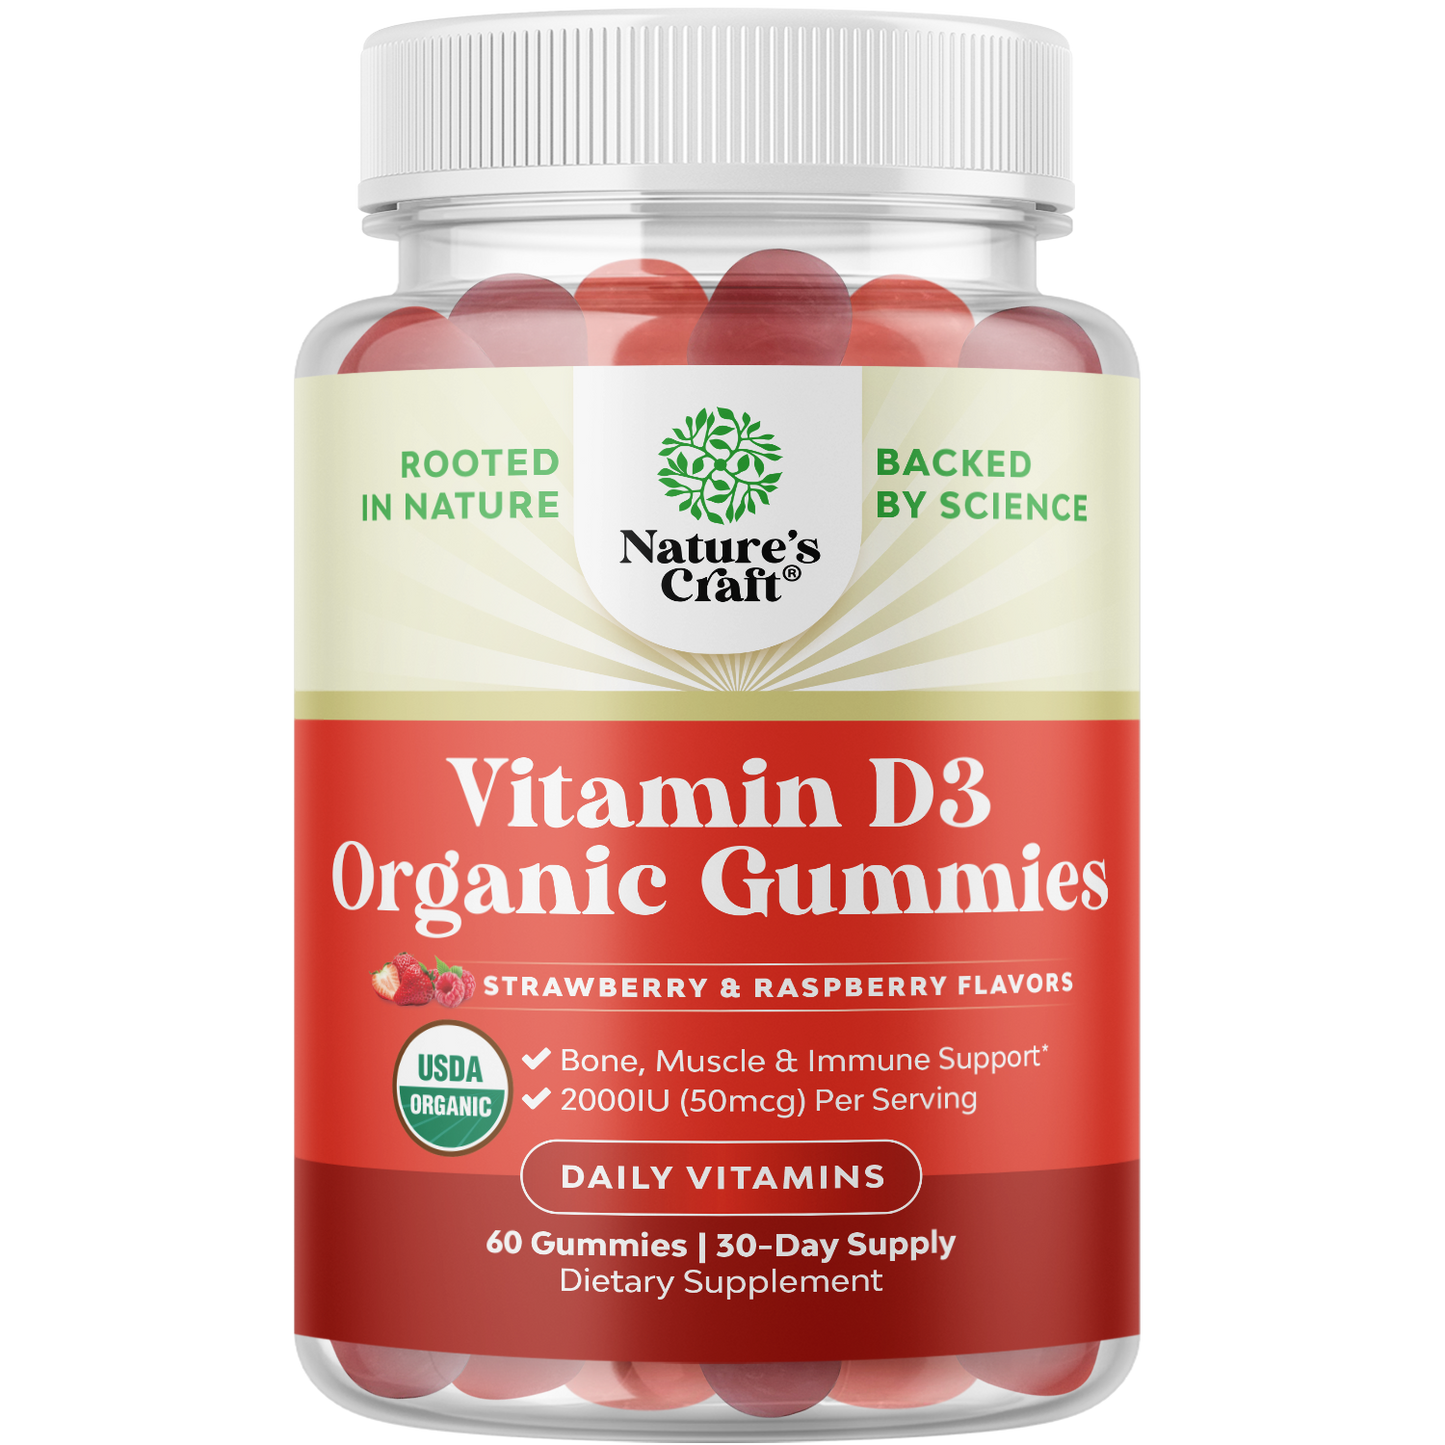 Vitamin D3 Organic  Gummies 2000IU per serving - 60 Gummies